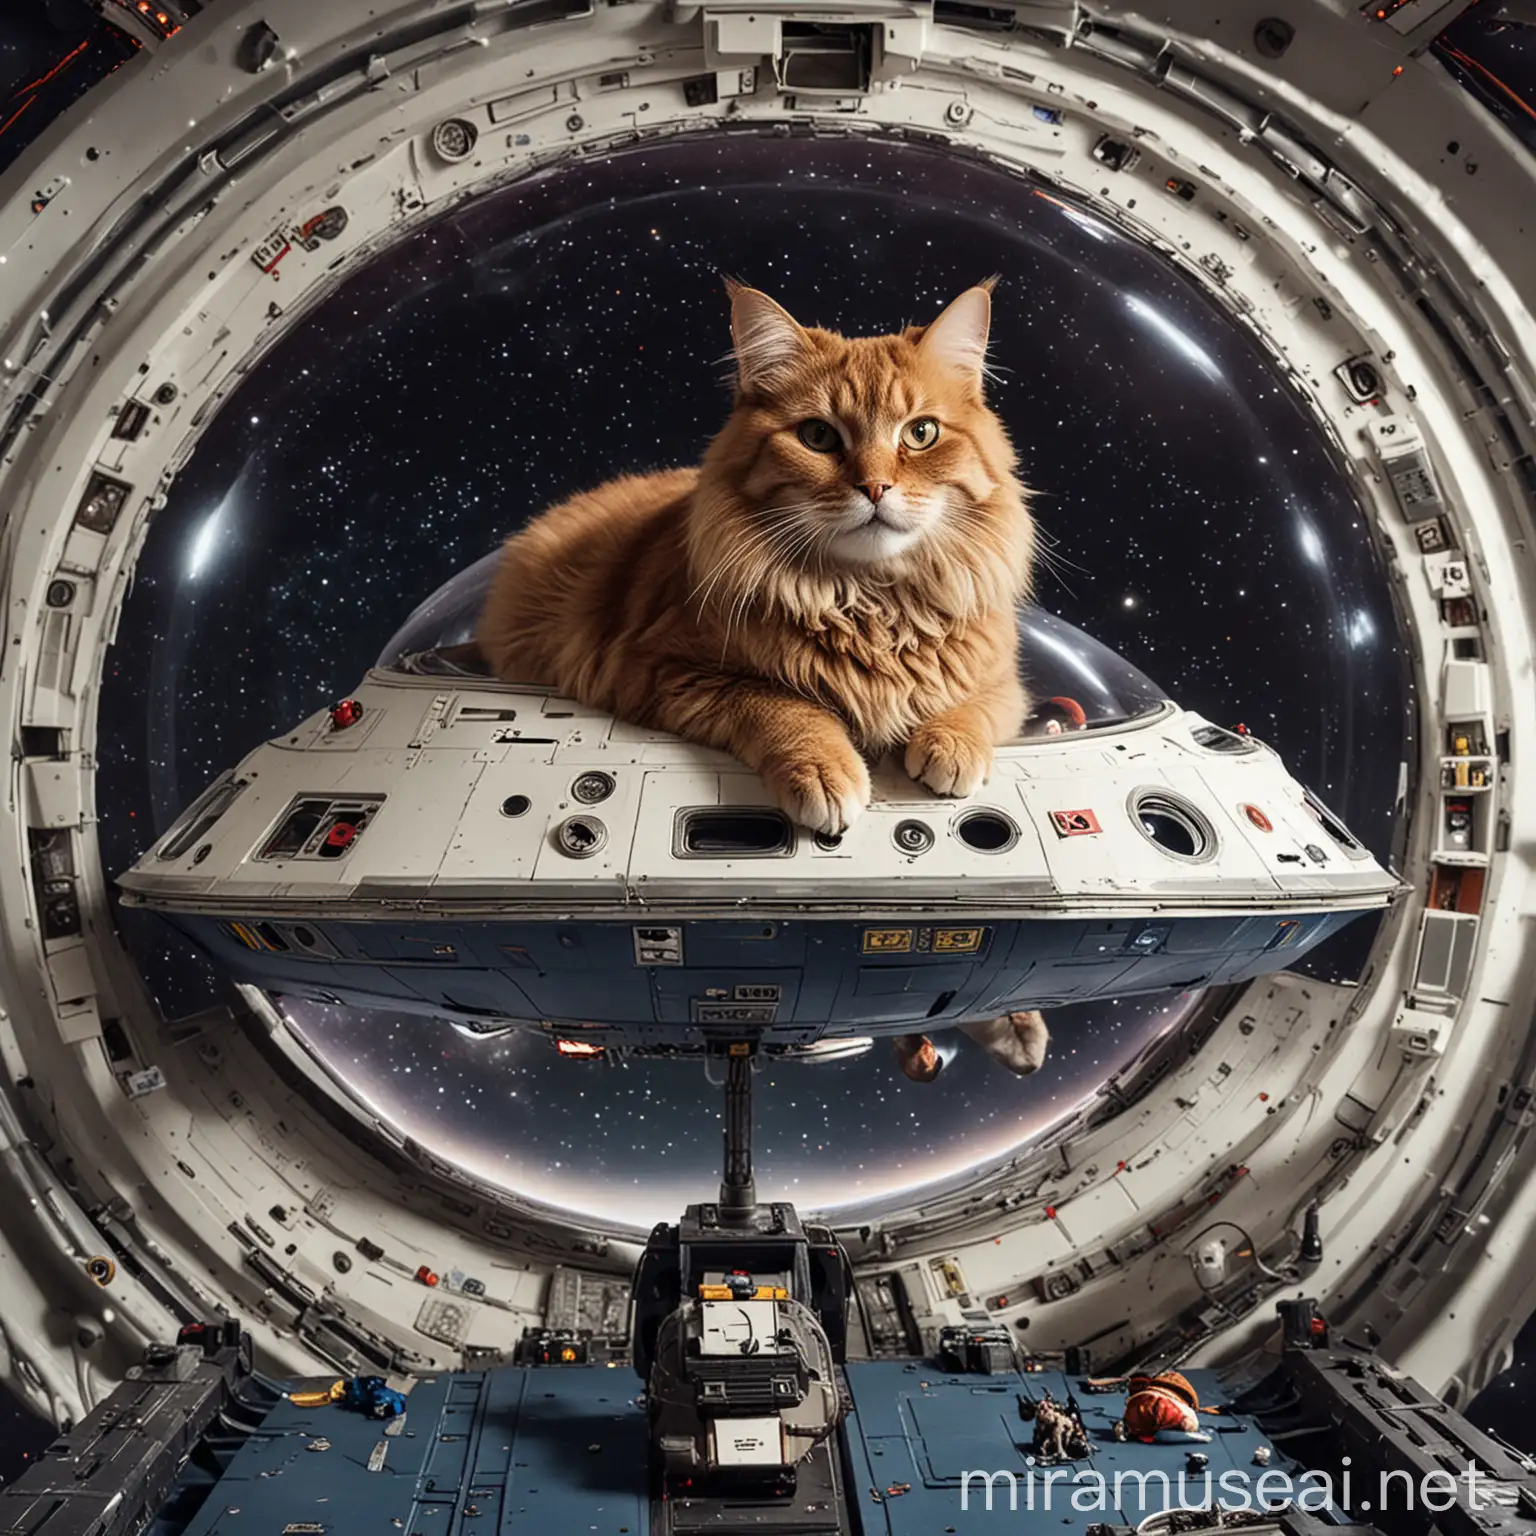 Enormous Cat Exploring a Spaceship Interior